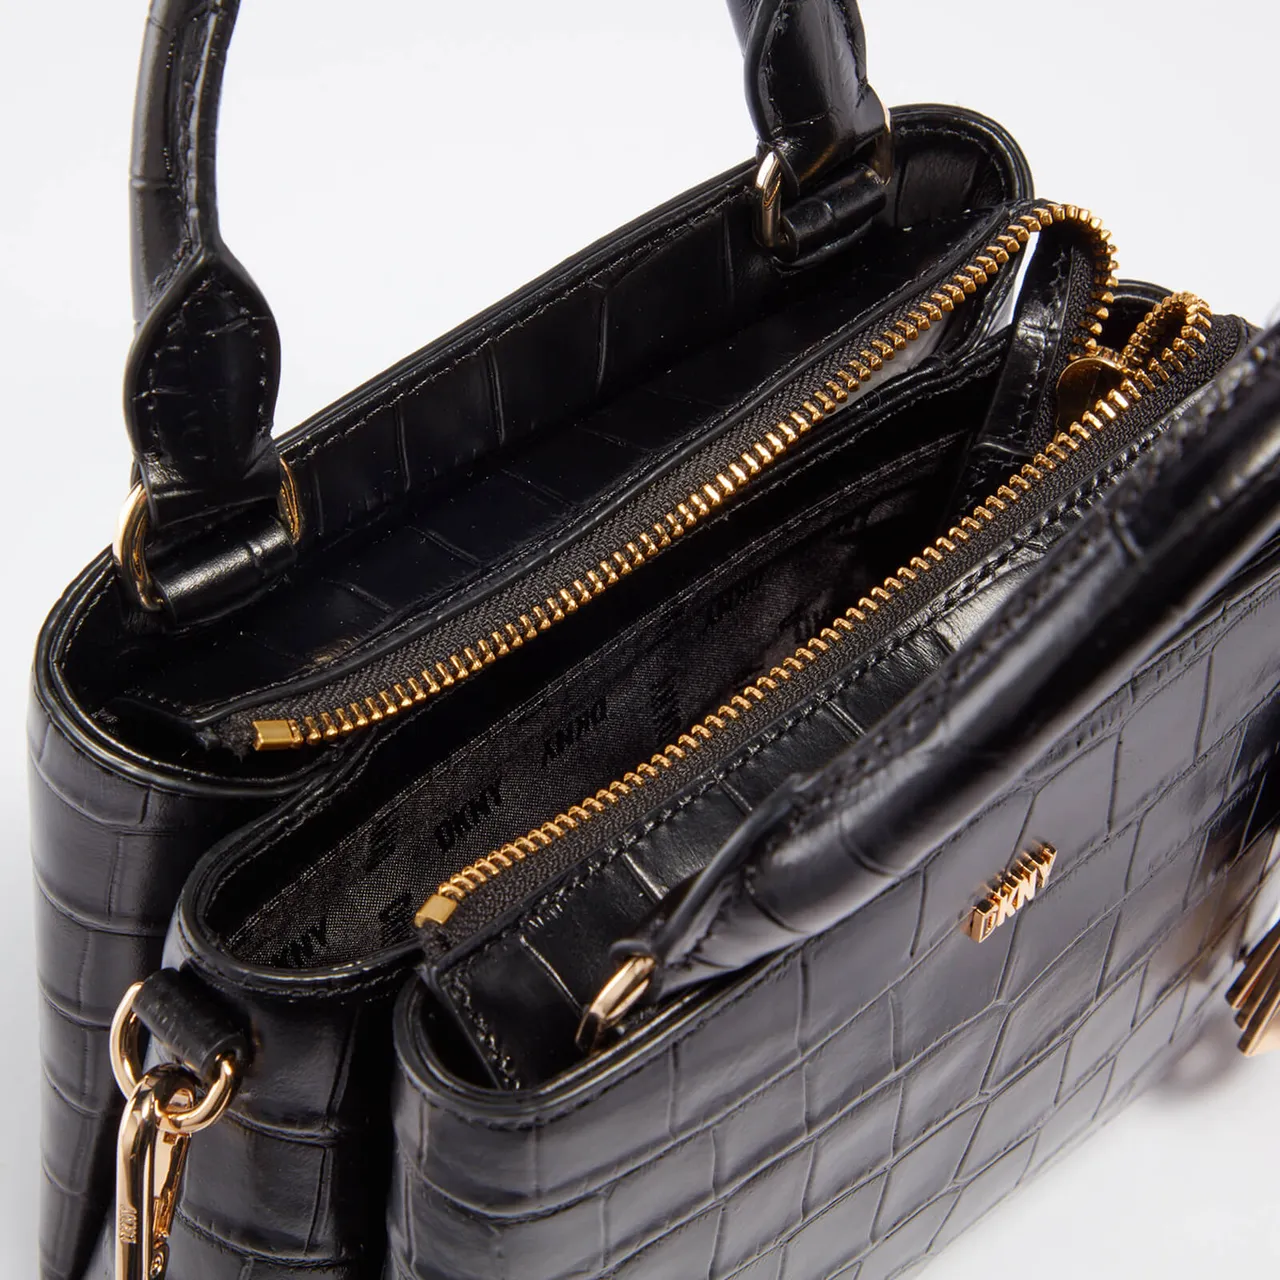 DKNY Paige Croc-Effect Leather Crossbody Satchel Bag